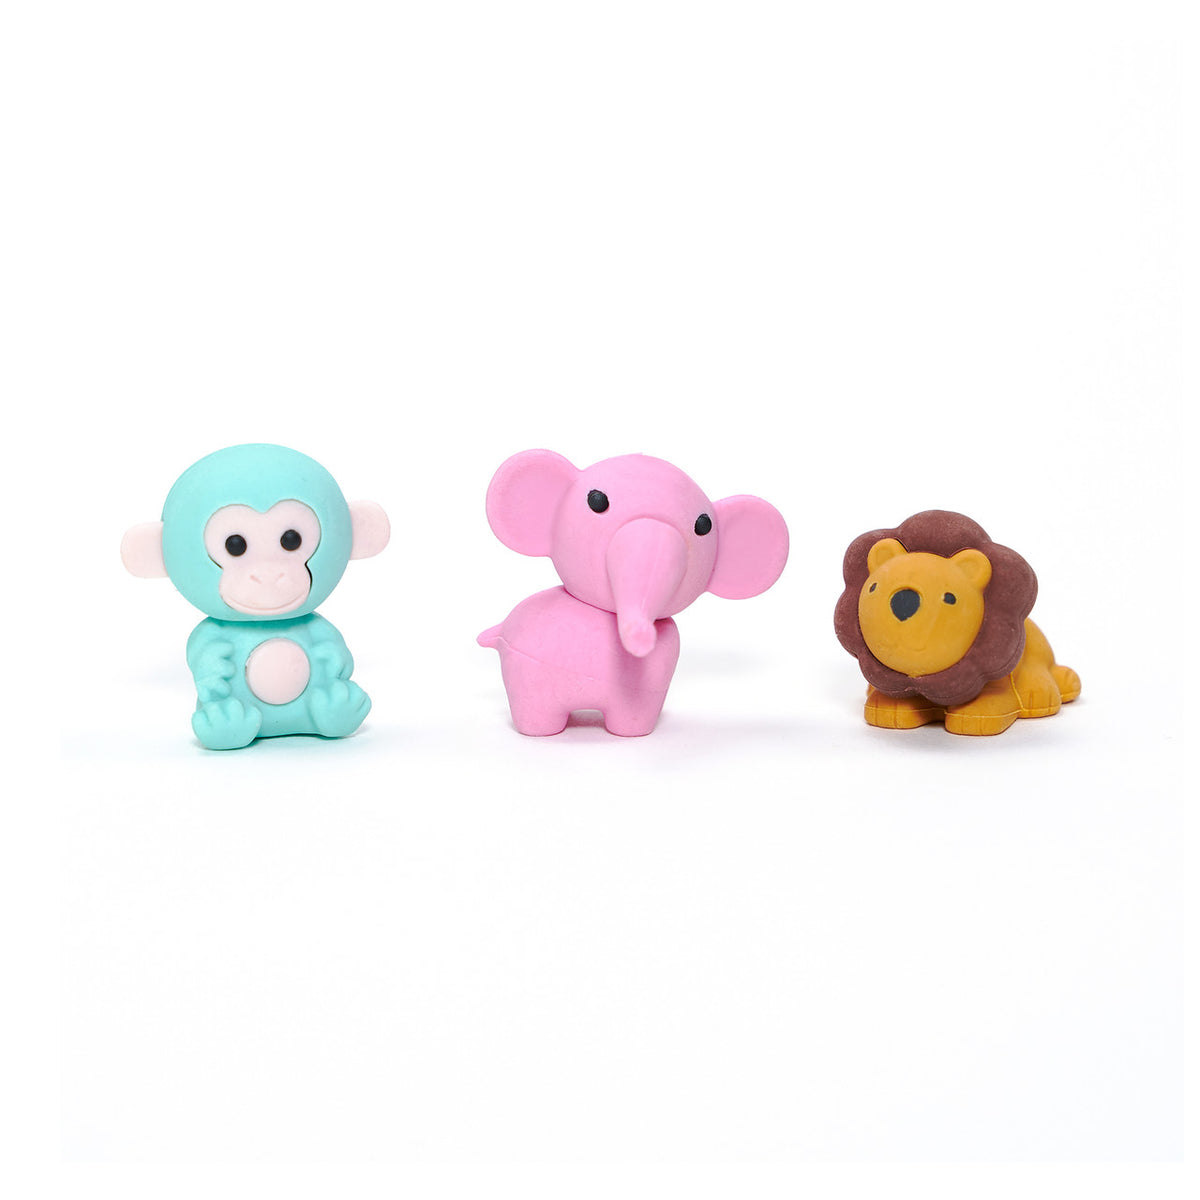 Yoobi 3D Erasers - Zoo – South Coast Baby Co